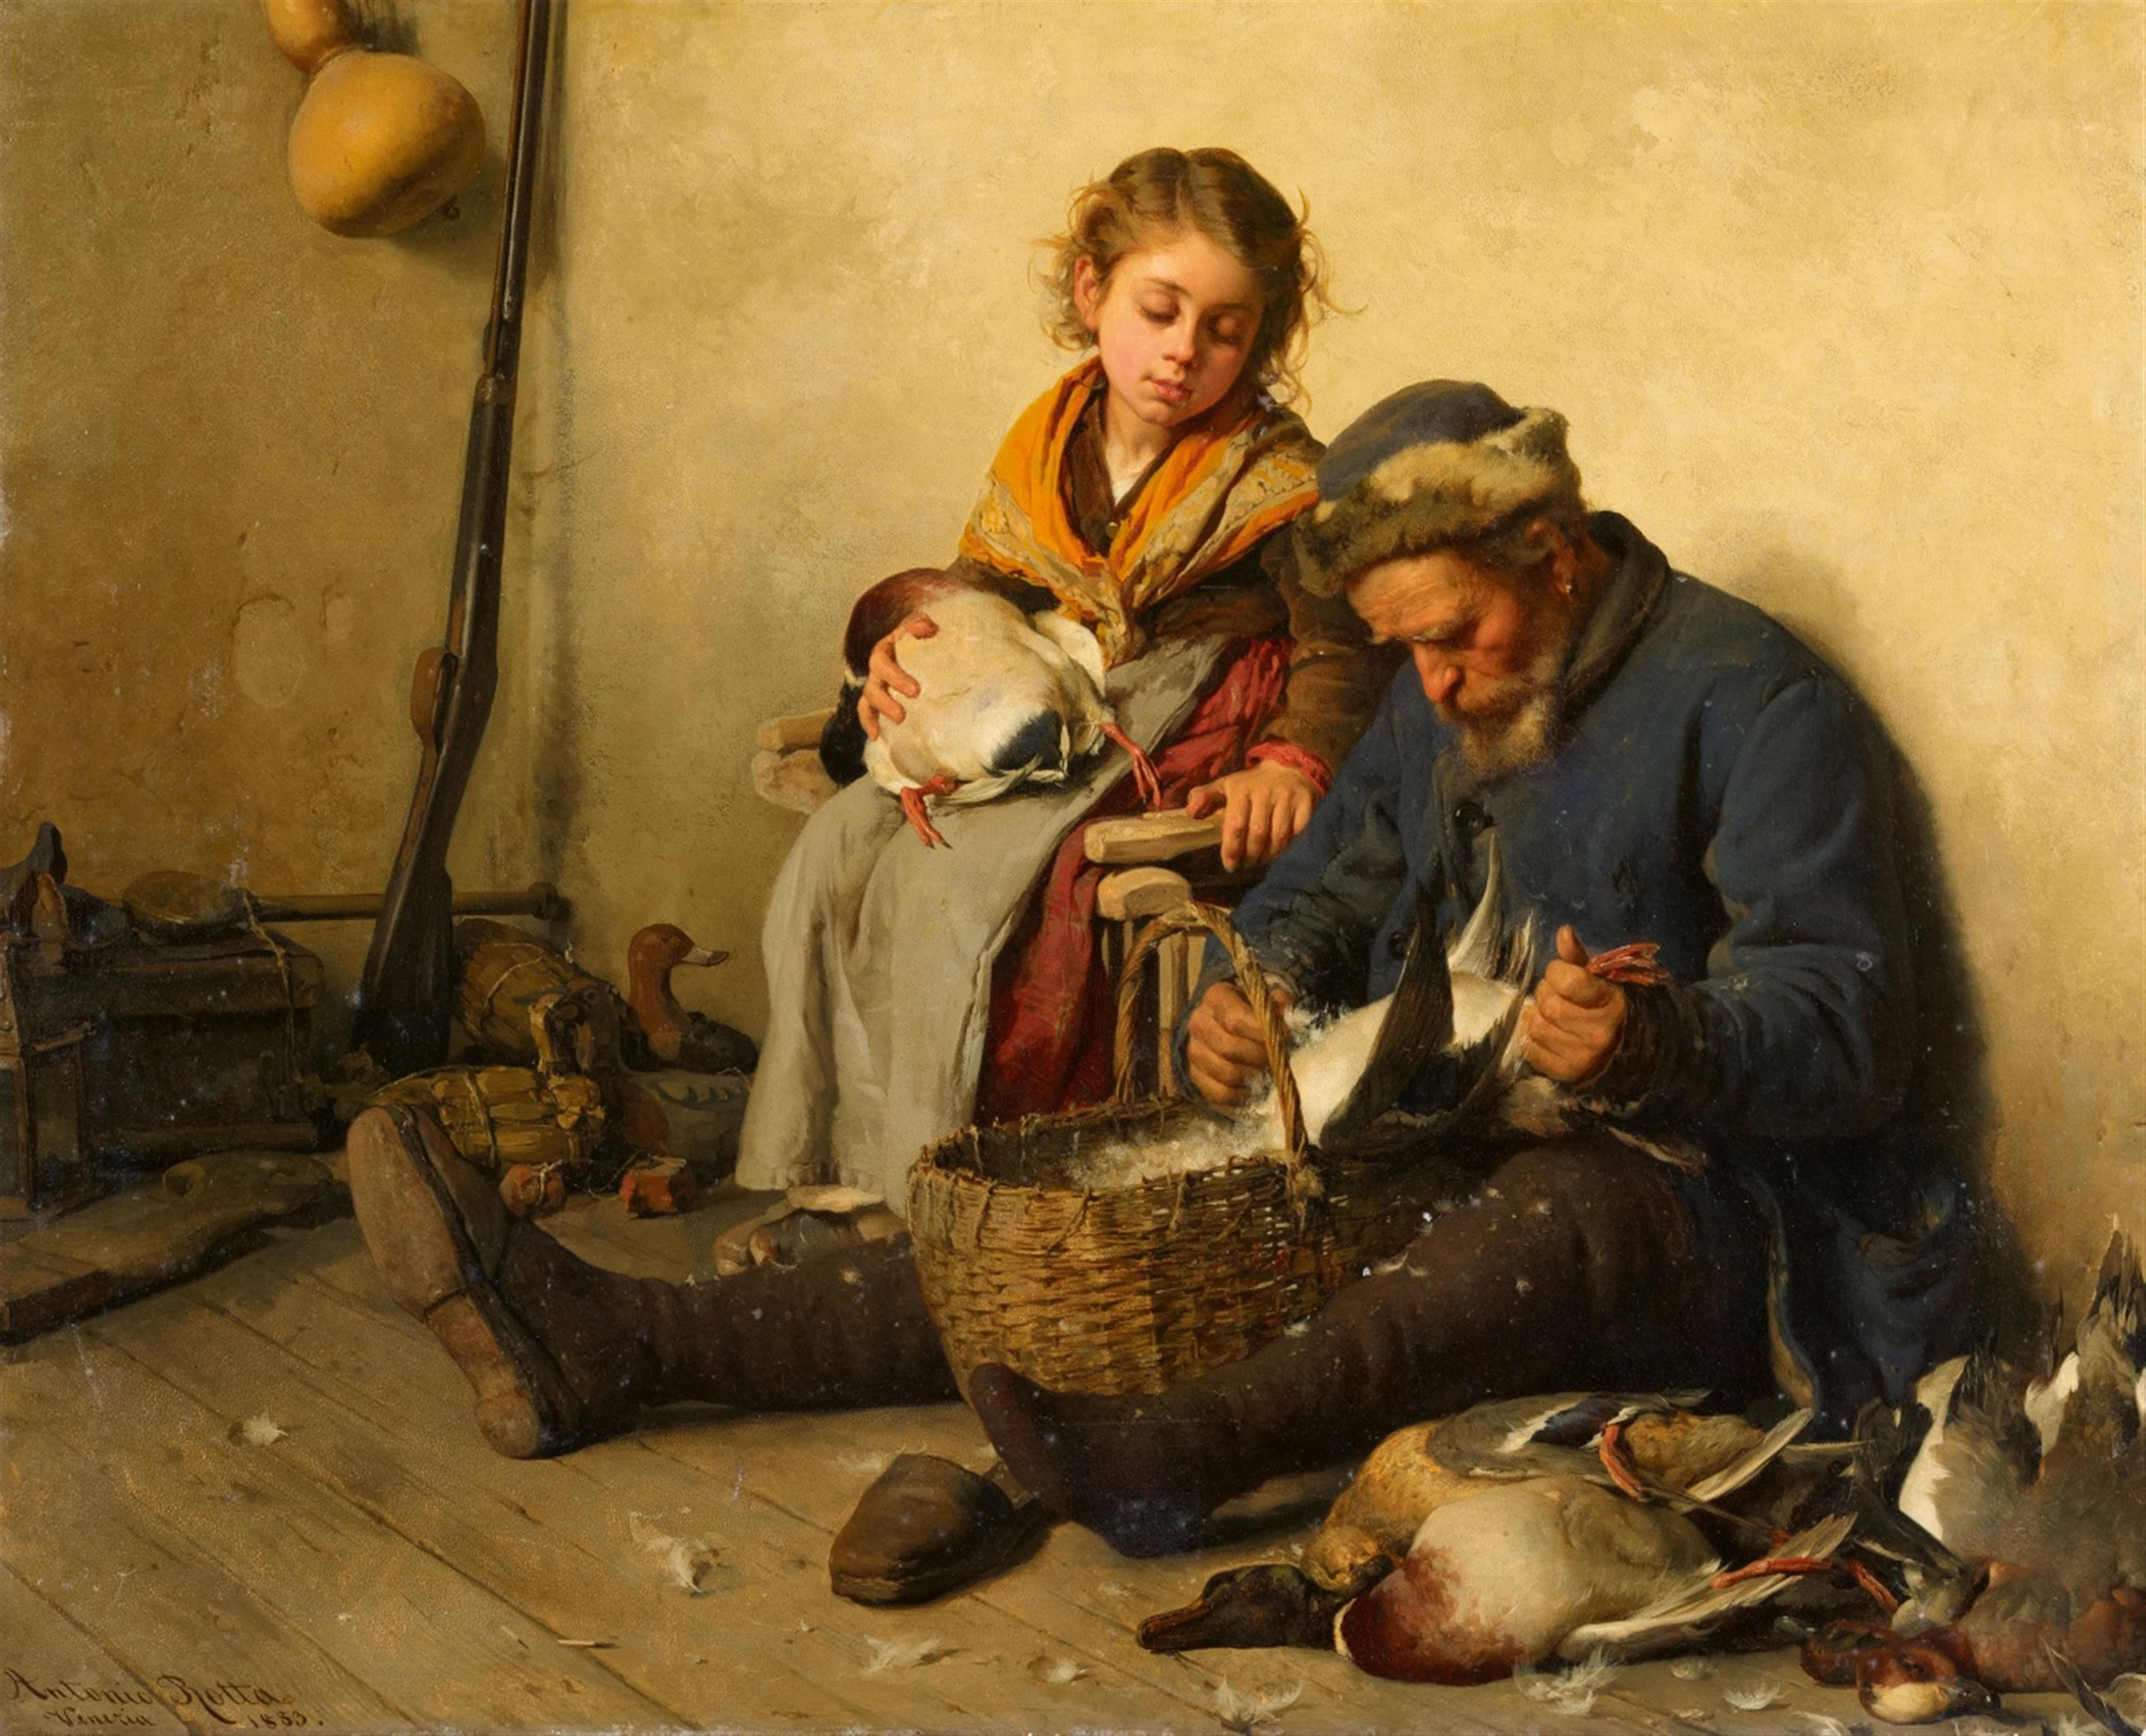 Antonio Rotta - Interior Scene with a Grandfather and Granddaughter plucking Ducks - image-1